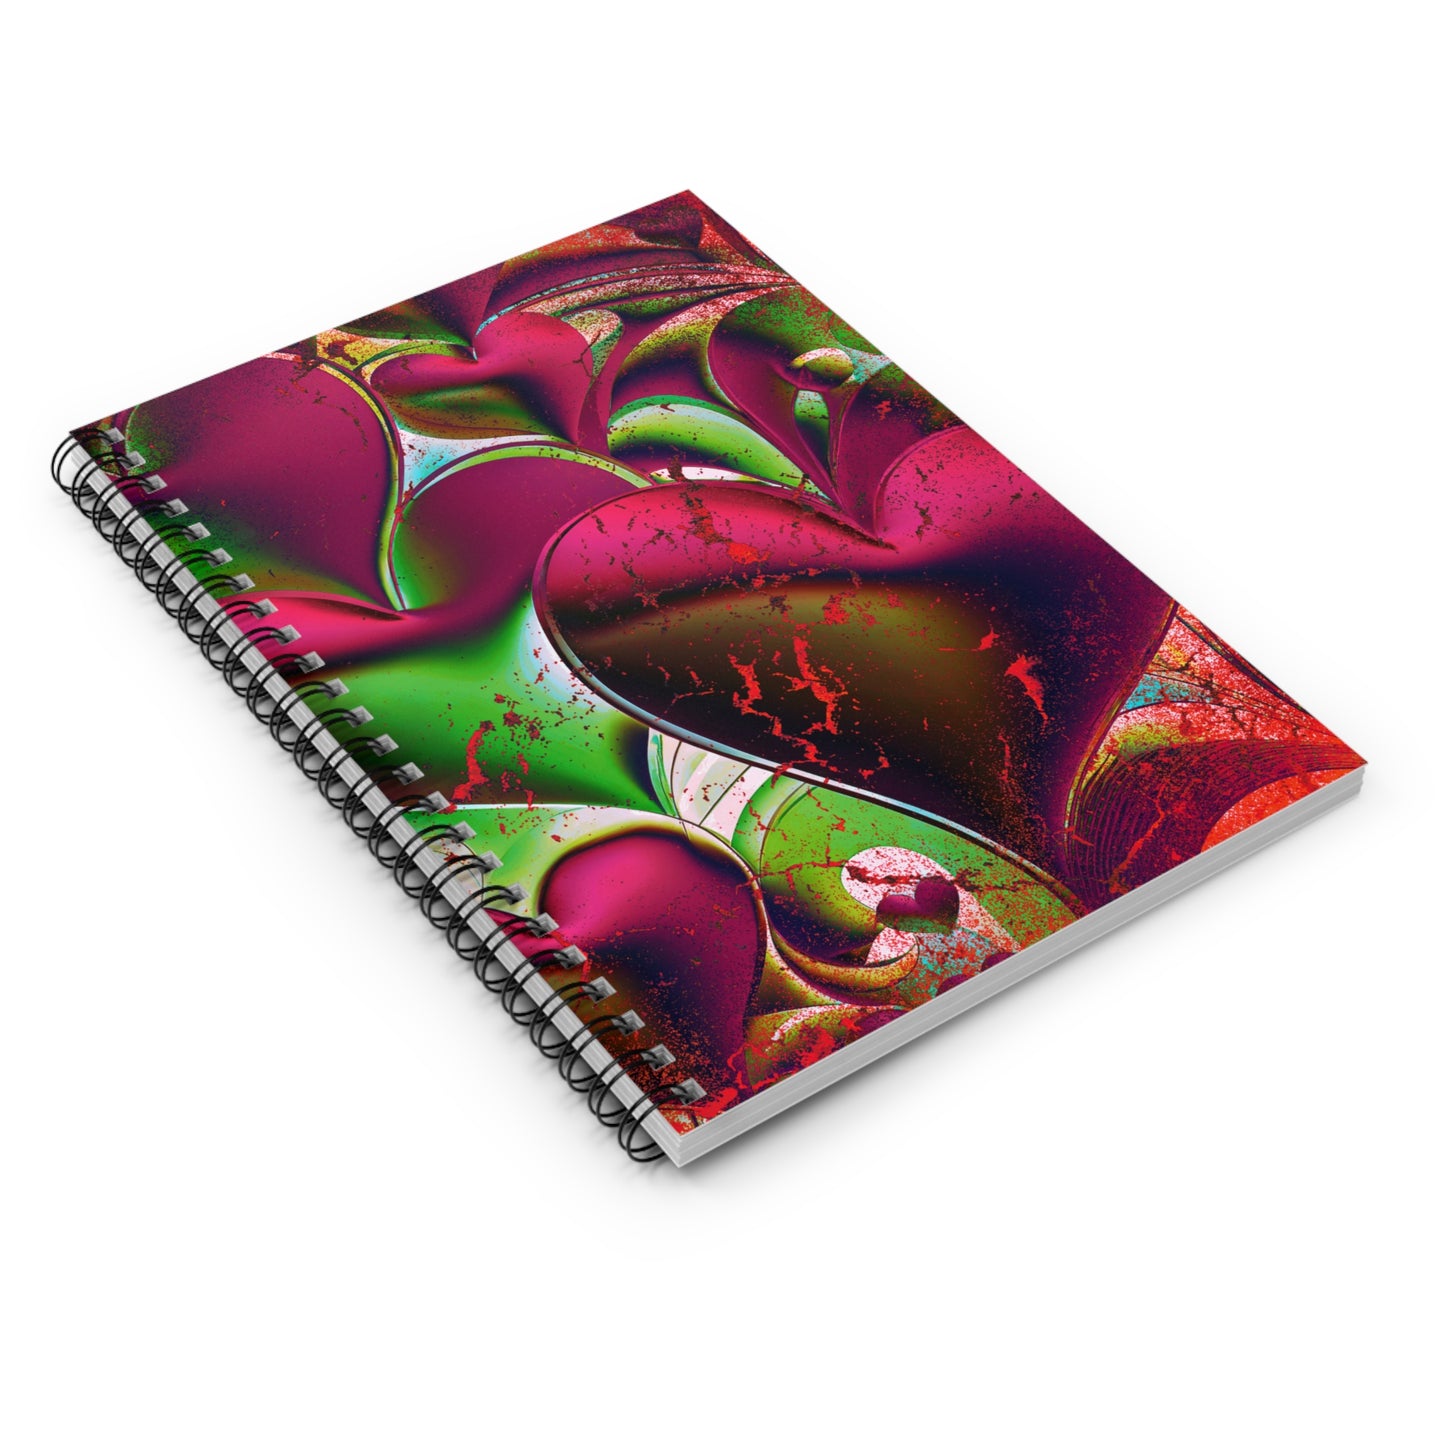 3D Hearts Valentine's Spiral Notebook Journal - Ruled Line